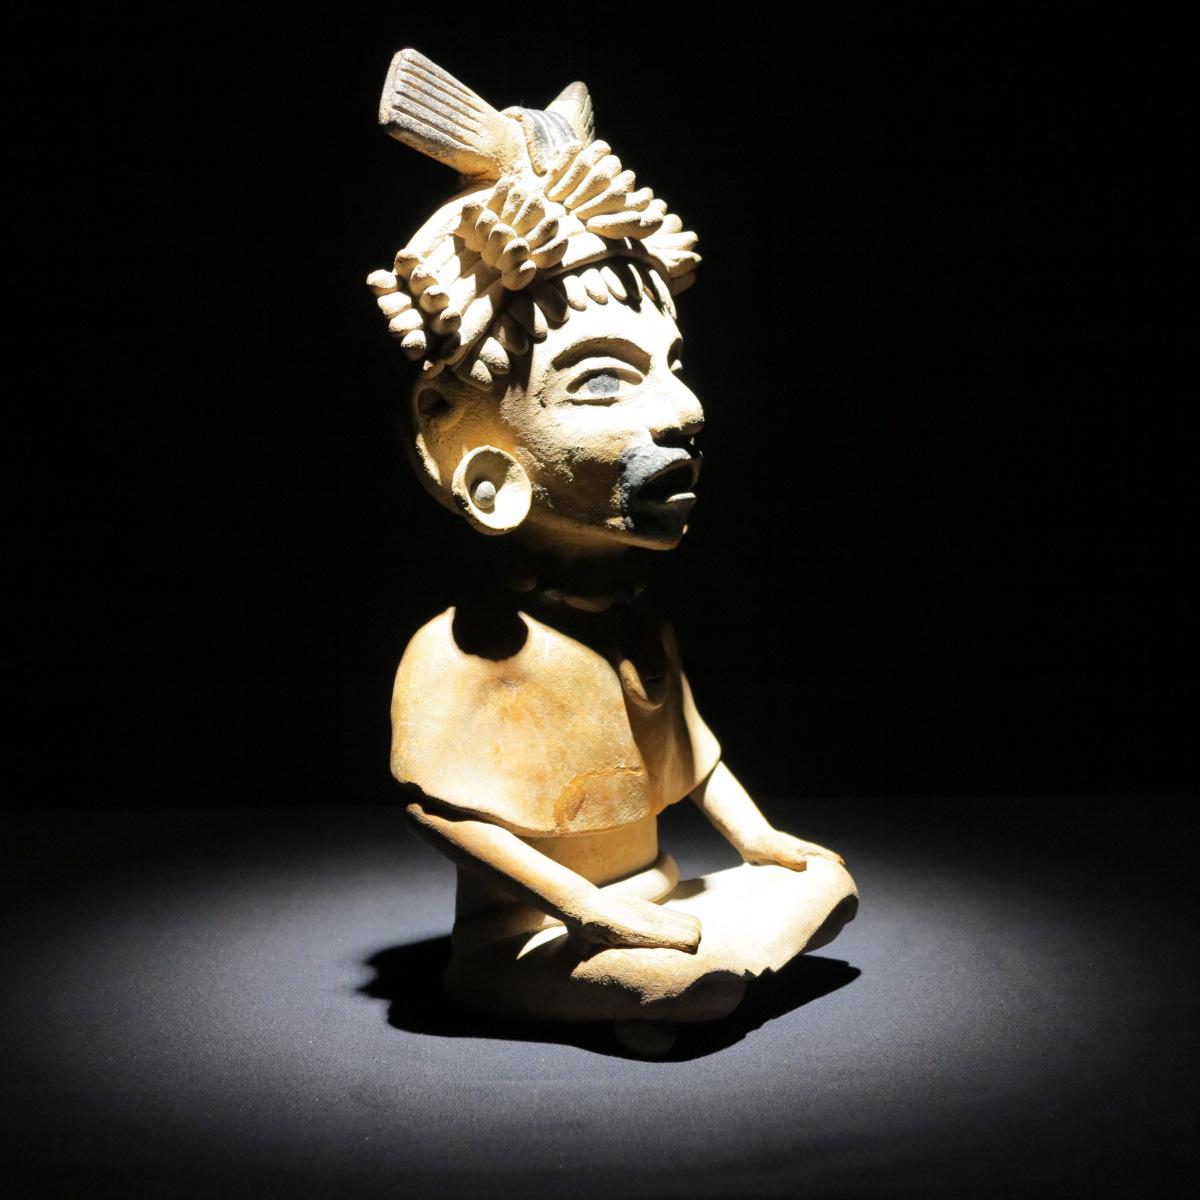 Veracruz Mexico Pre-Columbian ceramic Warrior figure sculpture - Black Figurative Sculpture by Unknown